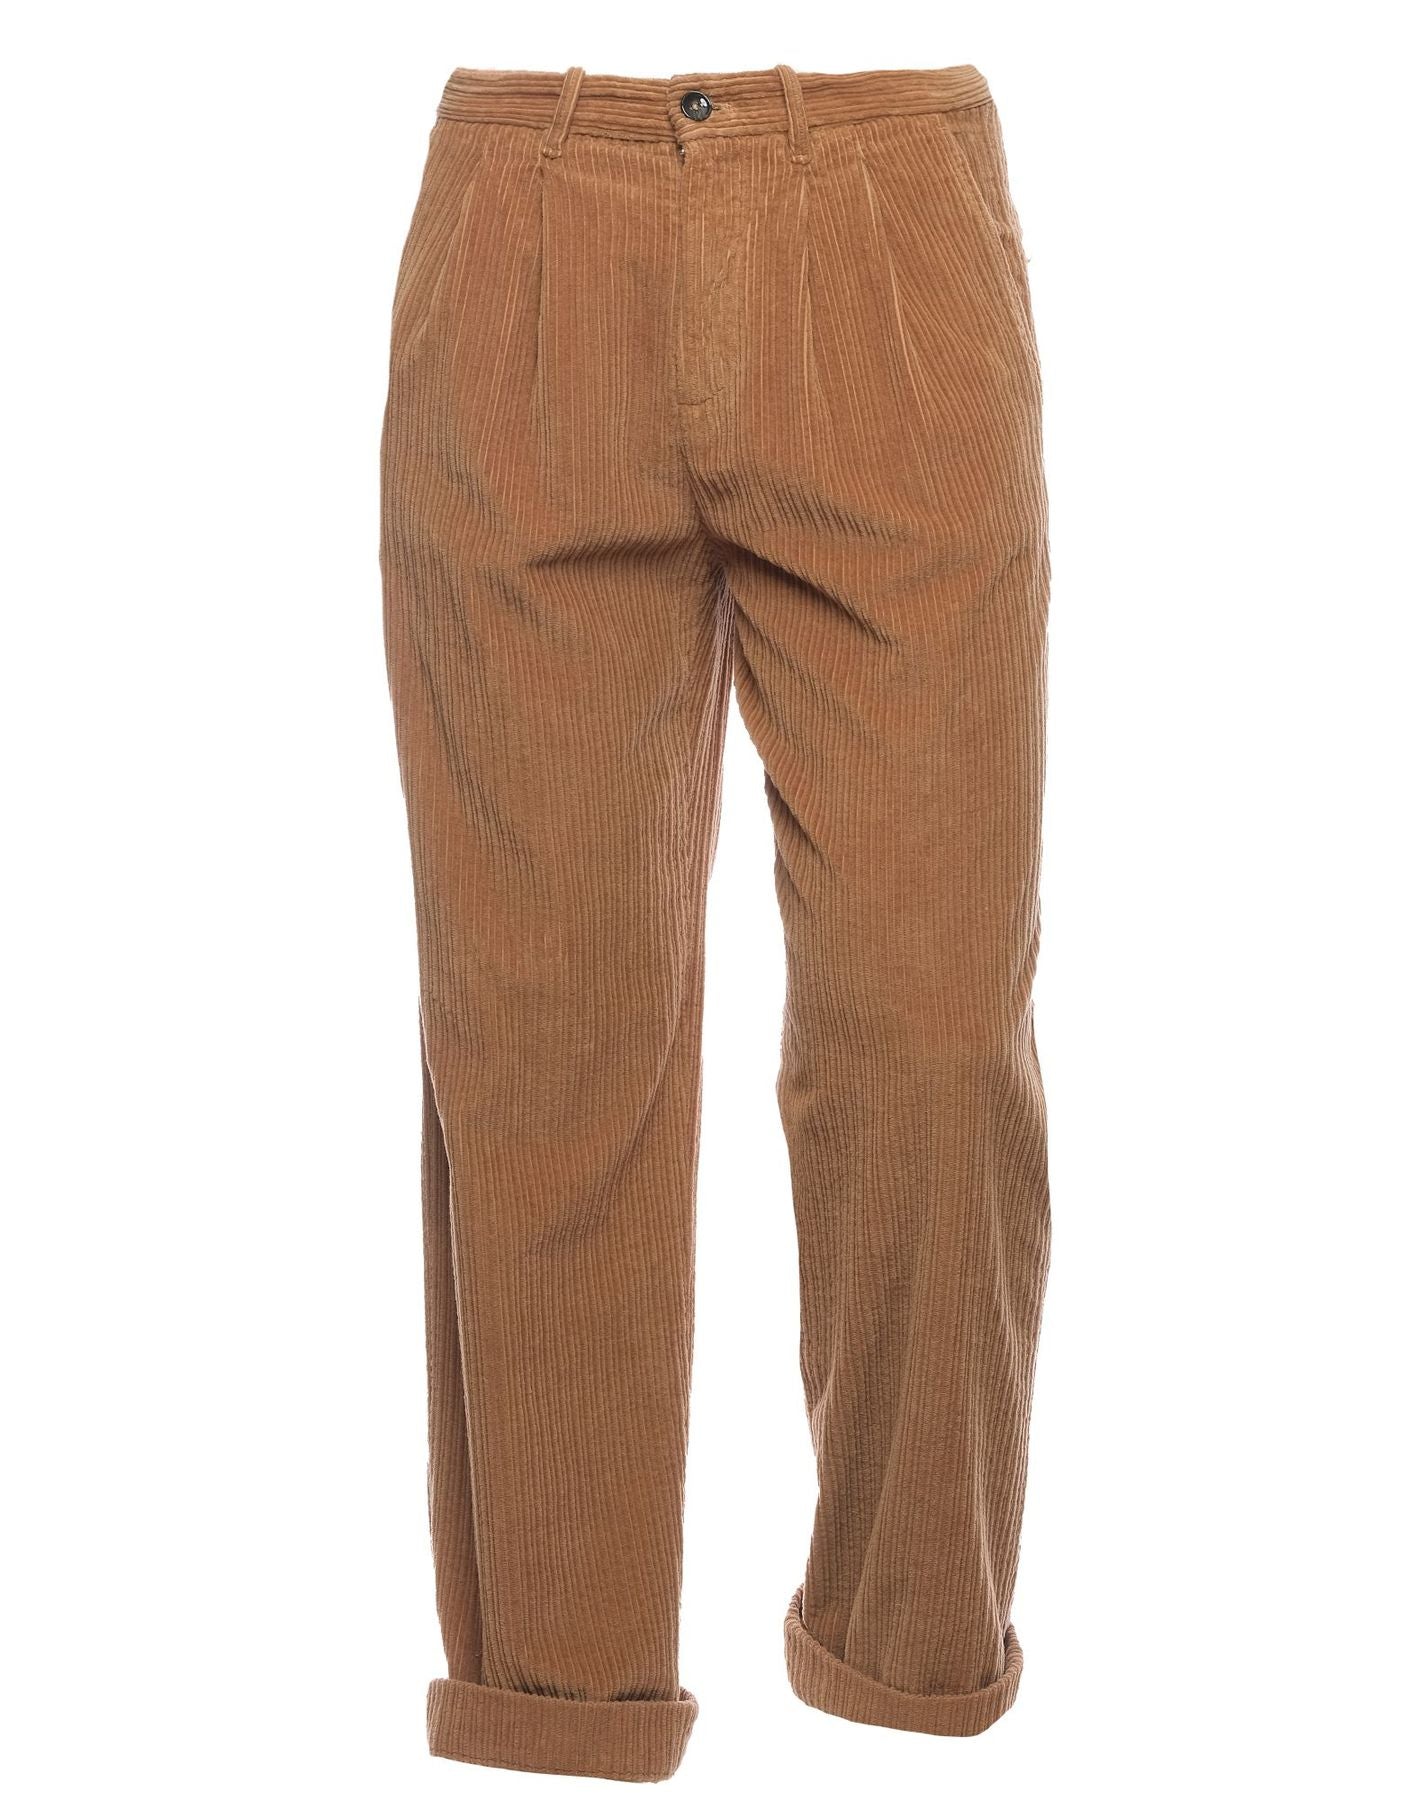 Pantalon man marco camel NINE:INTHE:MORNING